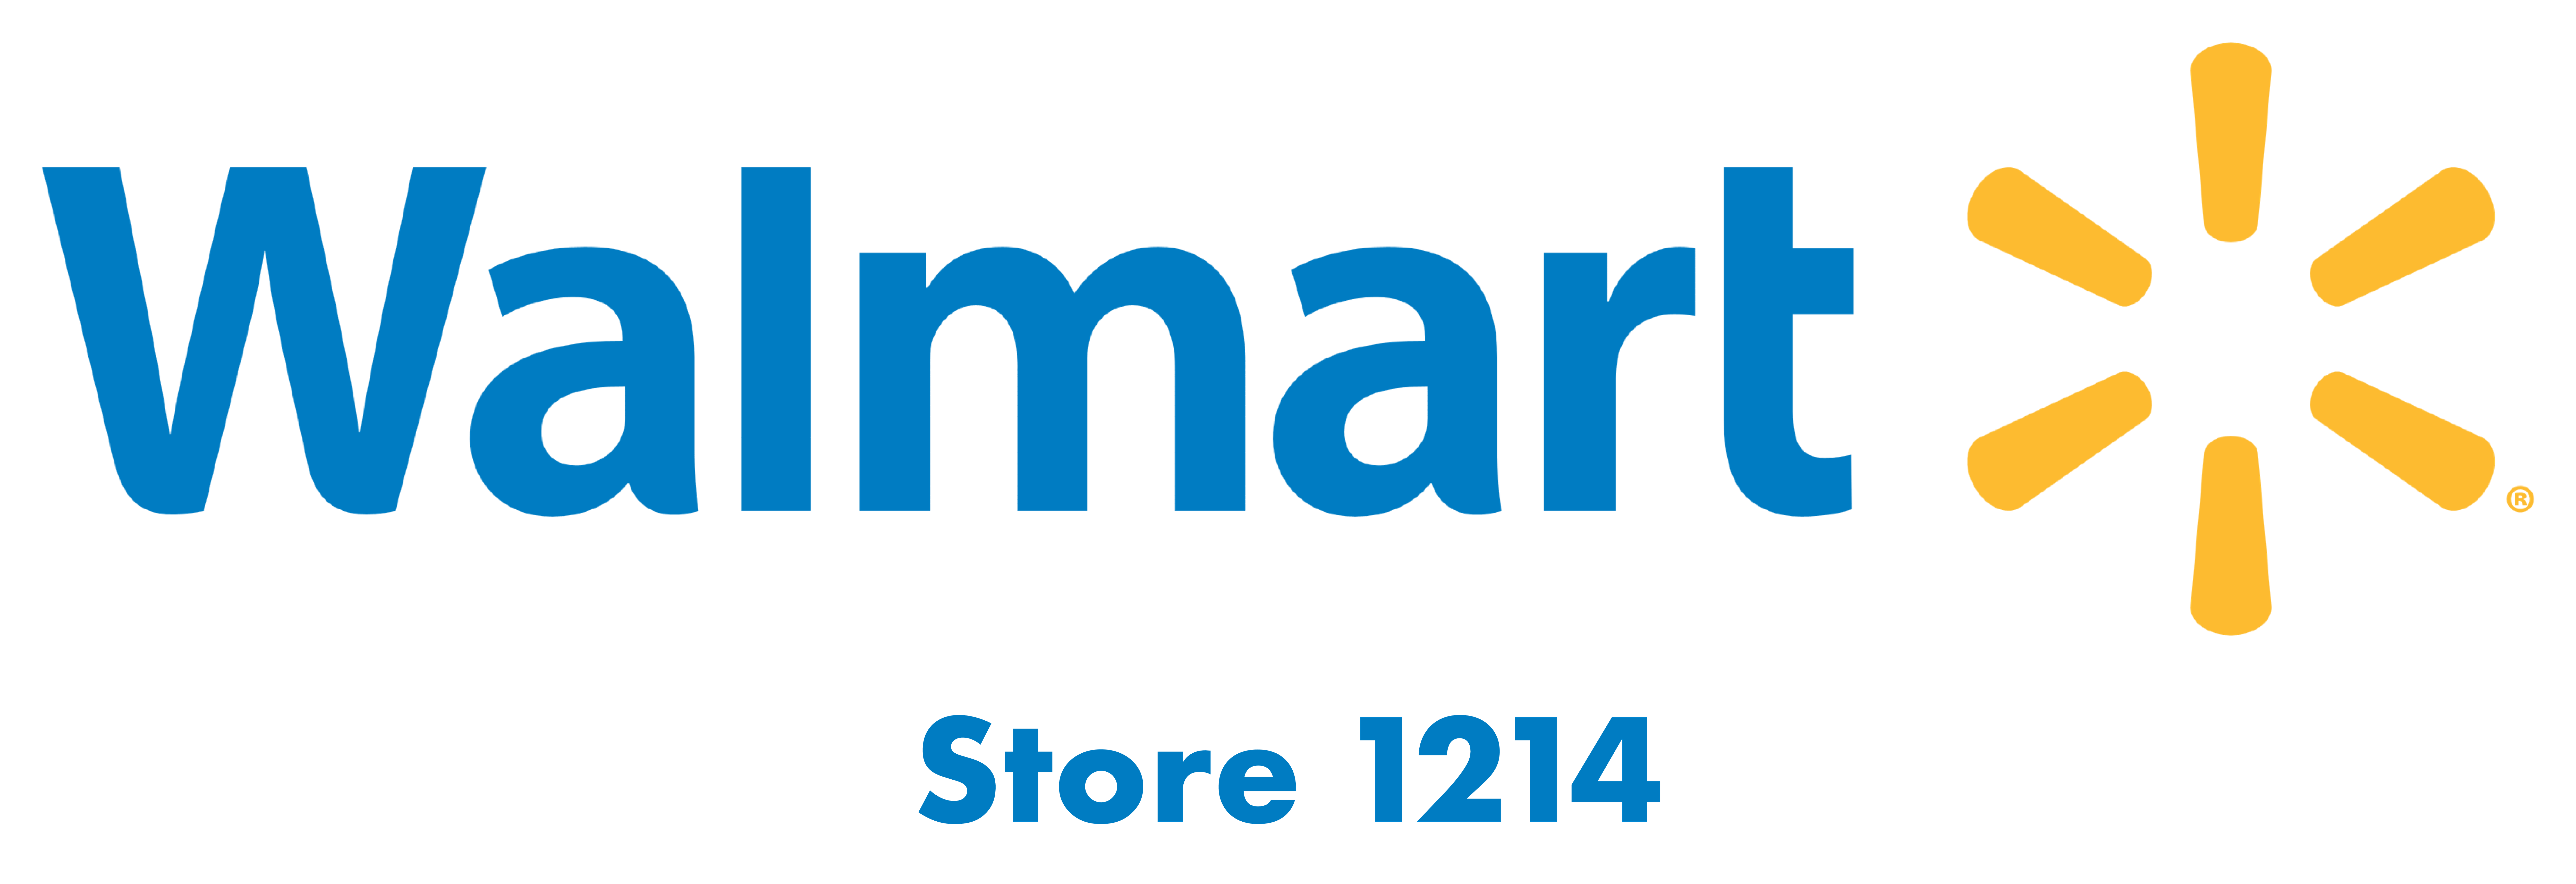 Walmart Store 1214